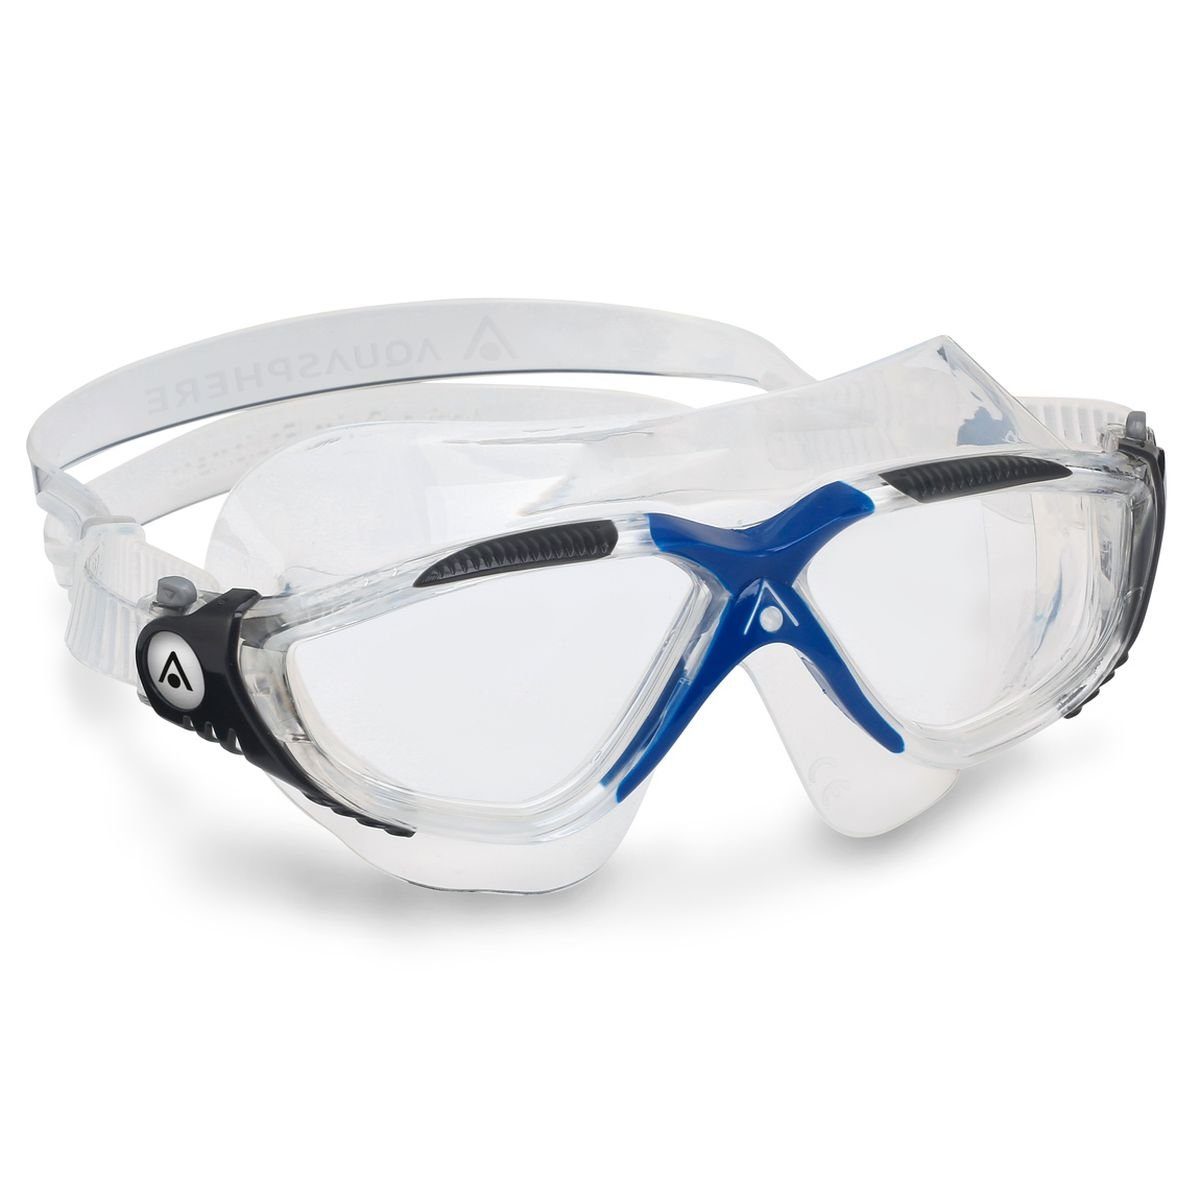 Aquasphere Schwimmbrille transparent/blau Vista Schwimmaske